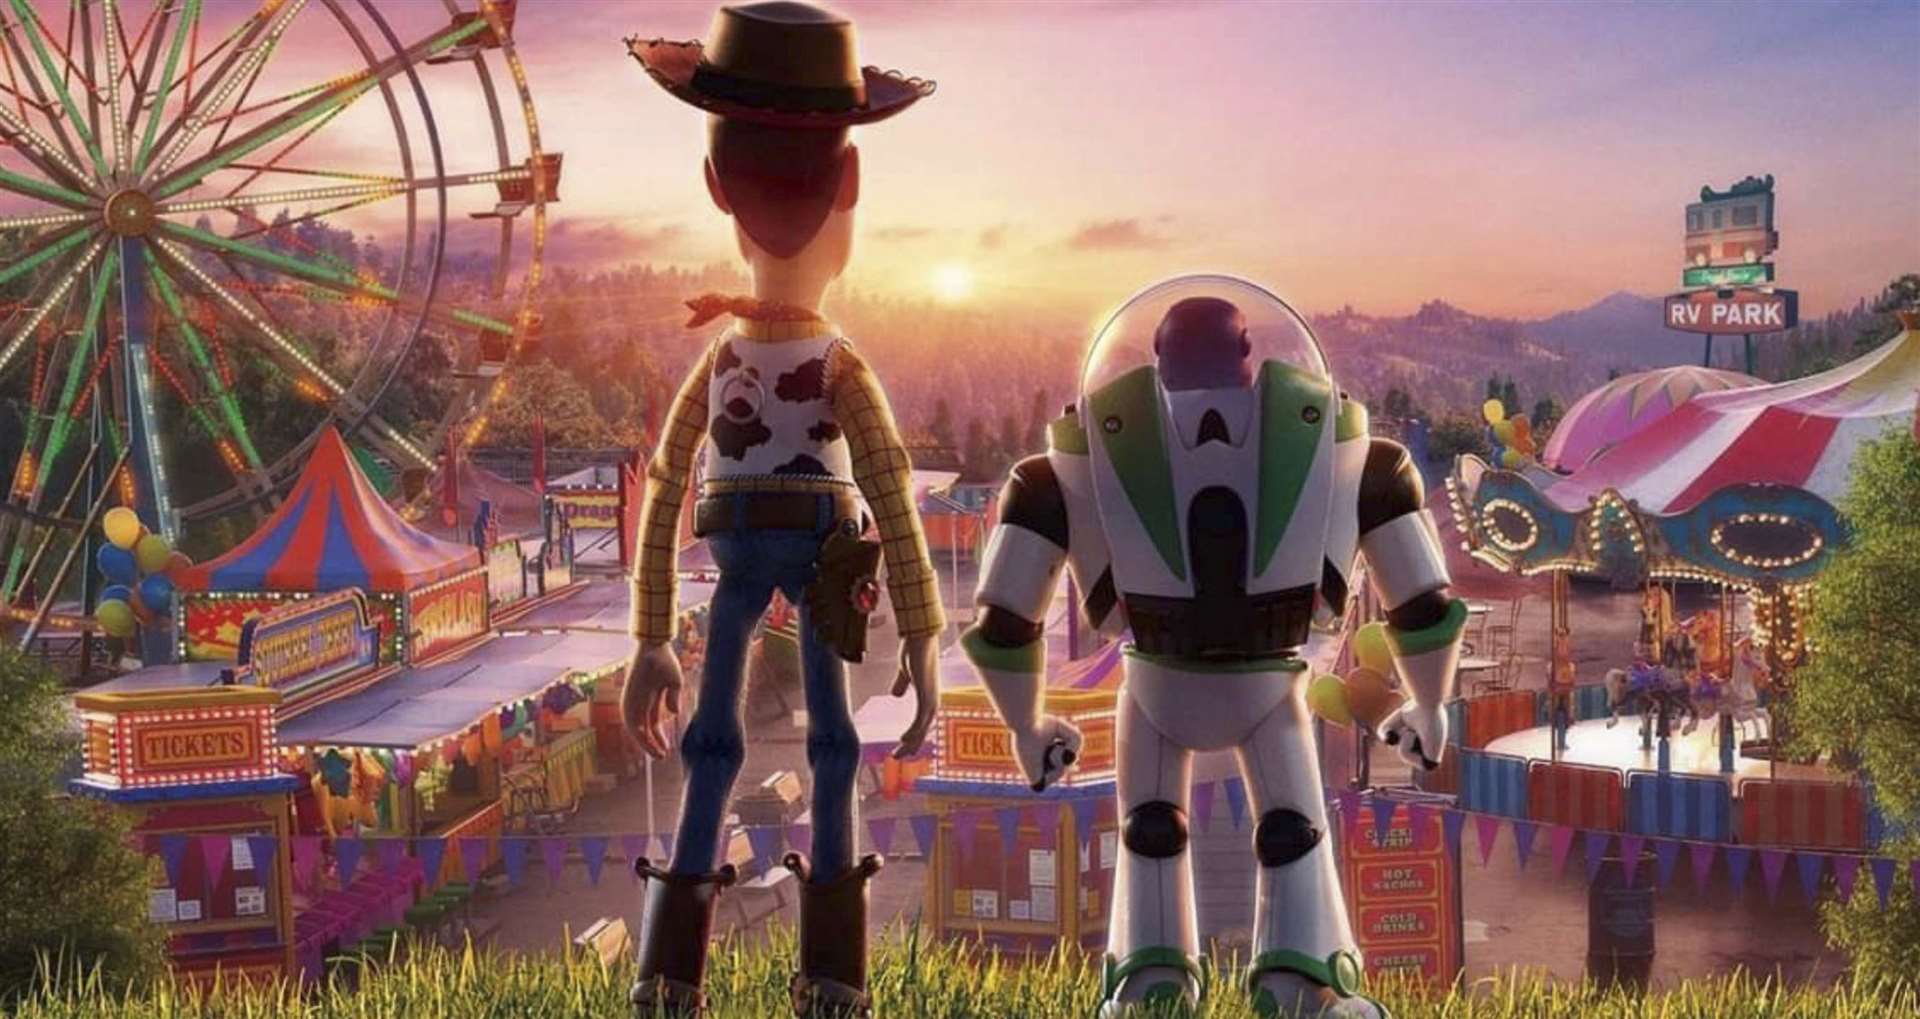 Tom Hanks as Woody and Tim Allen as Buzz Lightyear Picture: Disney/Pixar